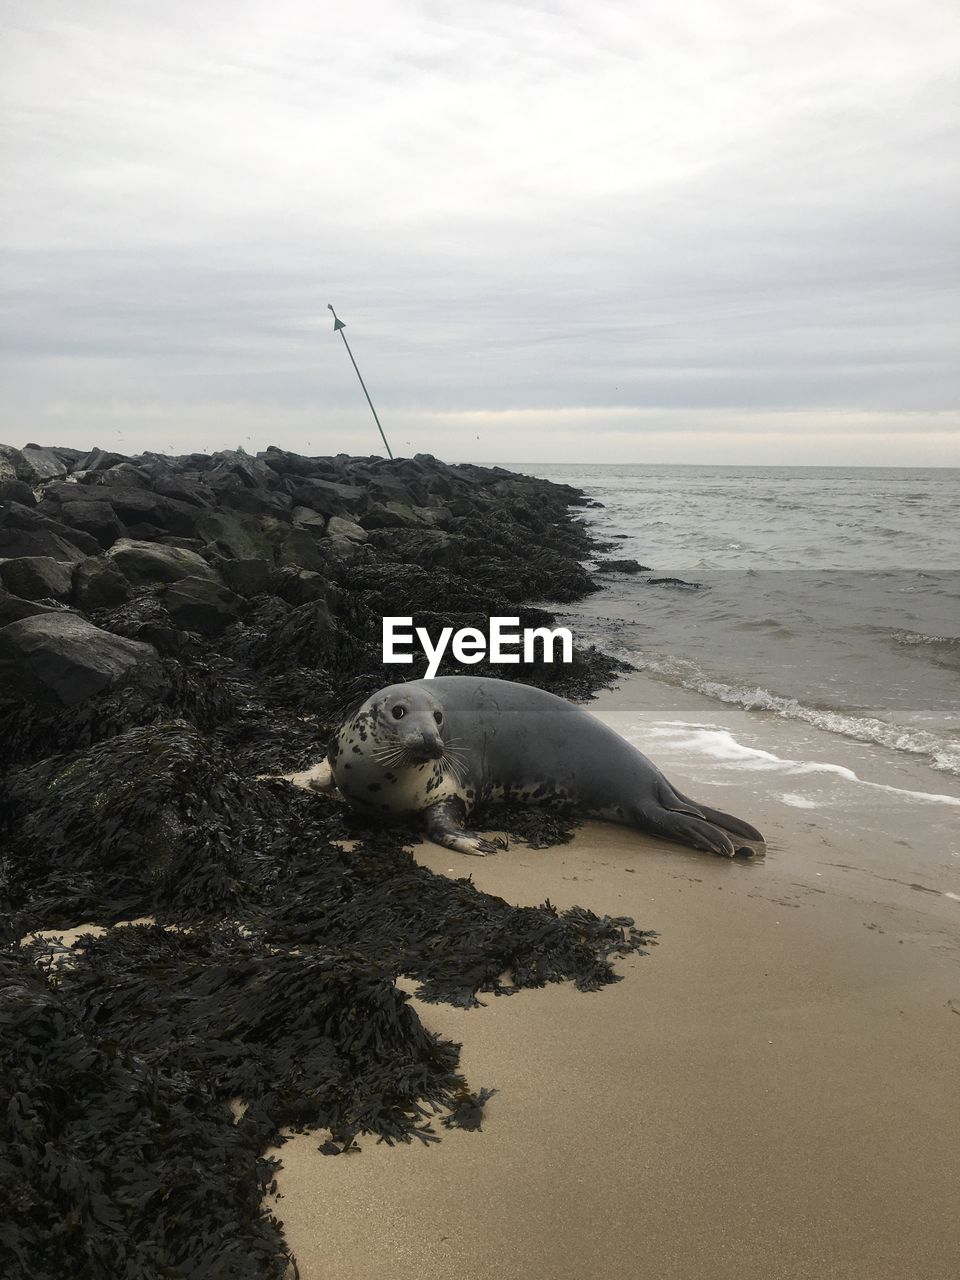 VIEW OF ANIMAL ON BEACH